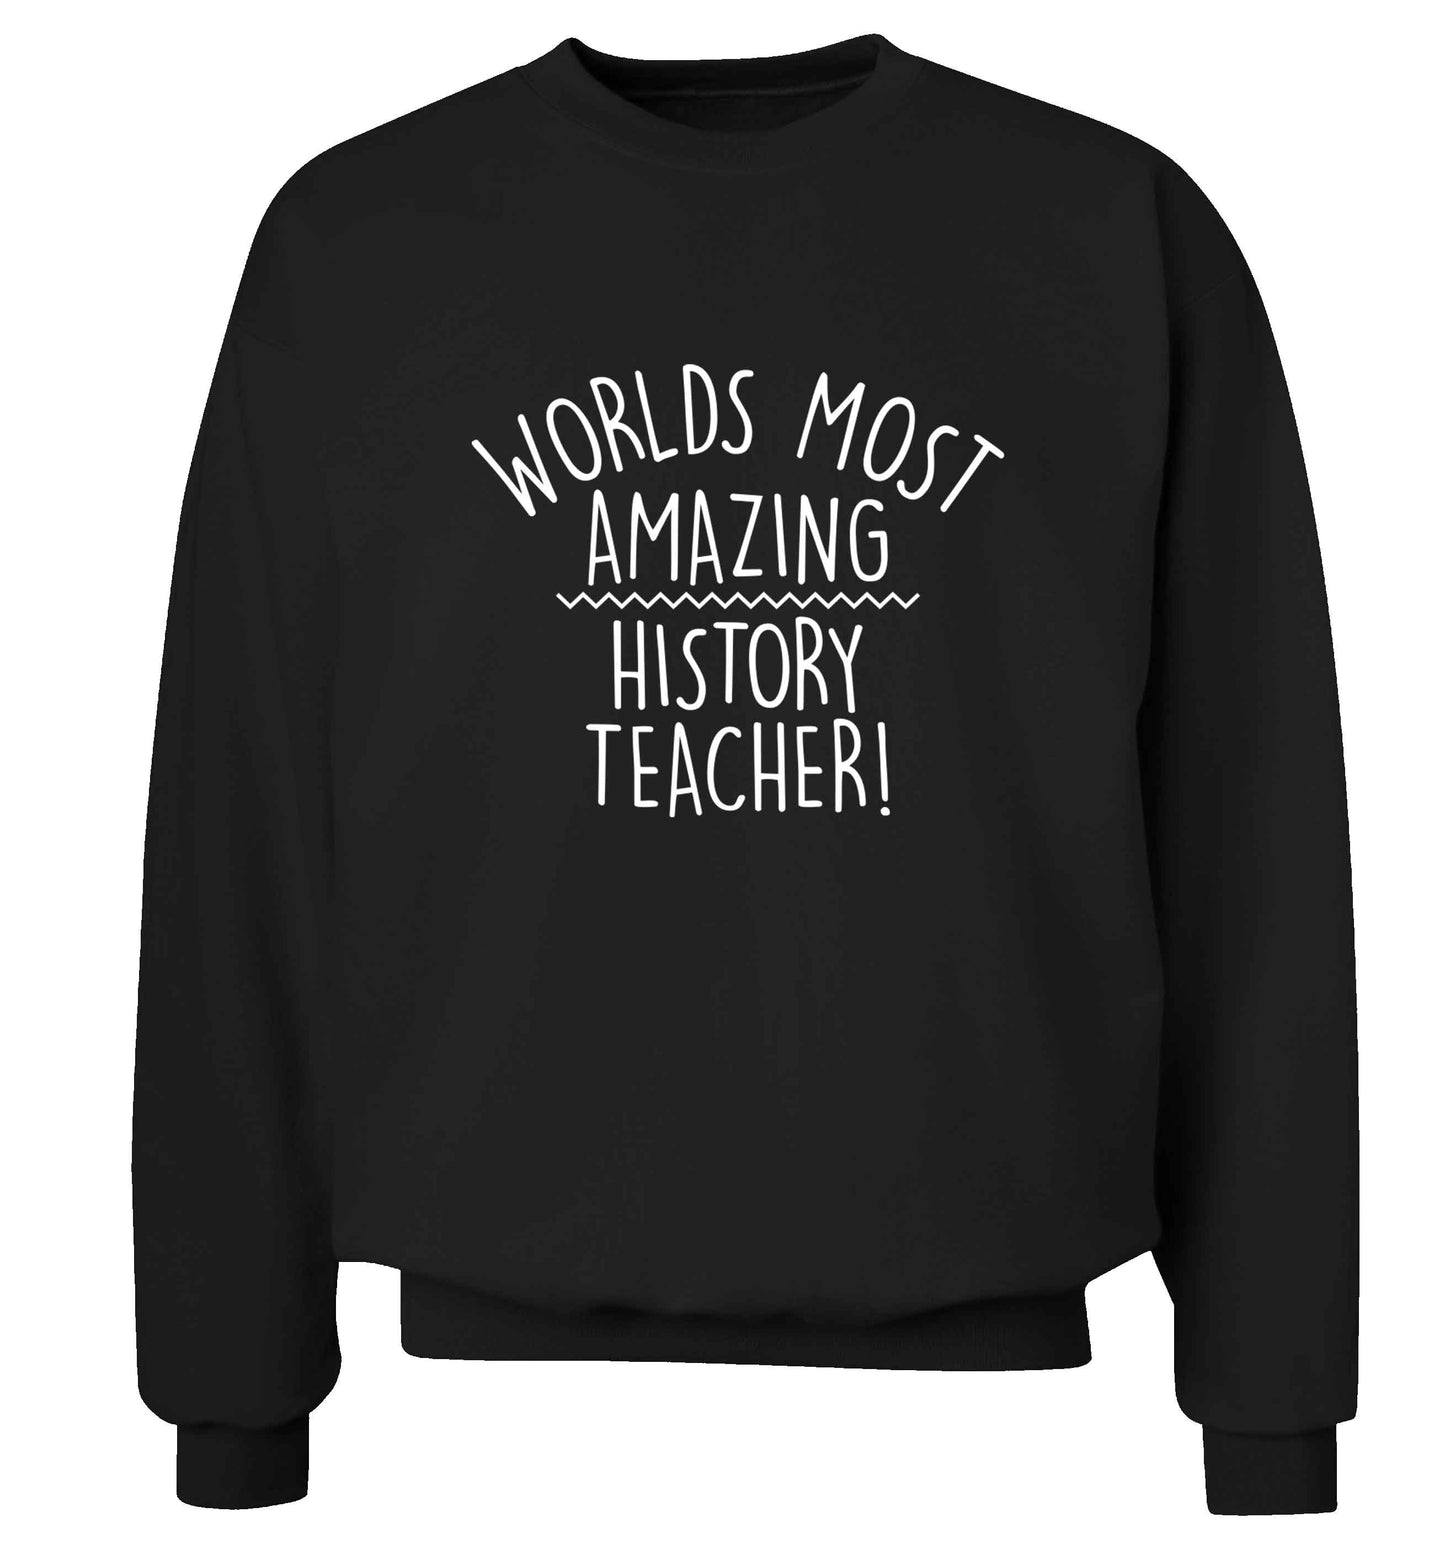 Worlds most amazing History teacher adult's unisex black sweater 2XL